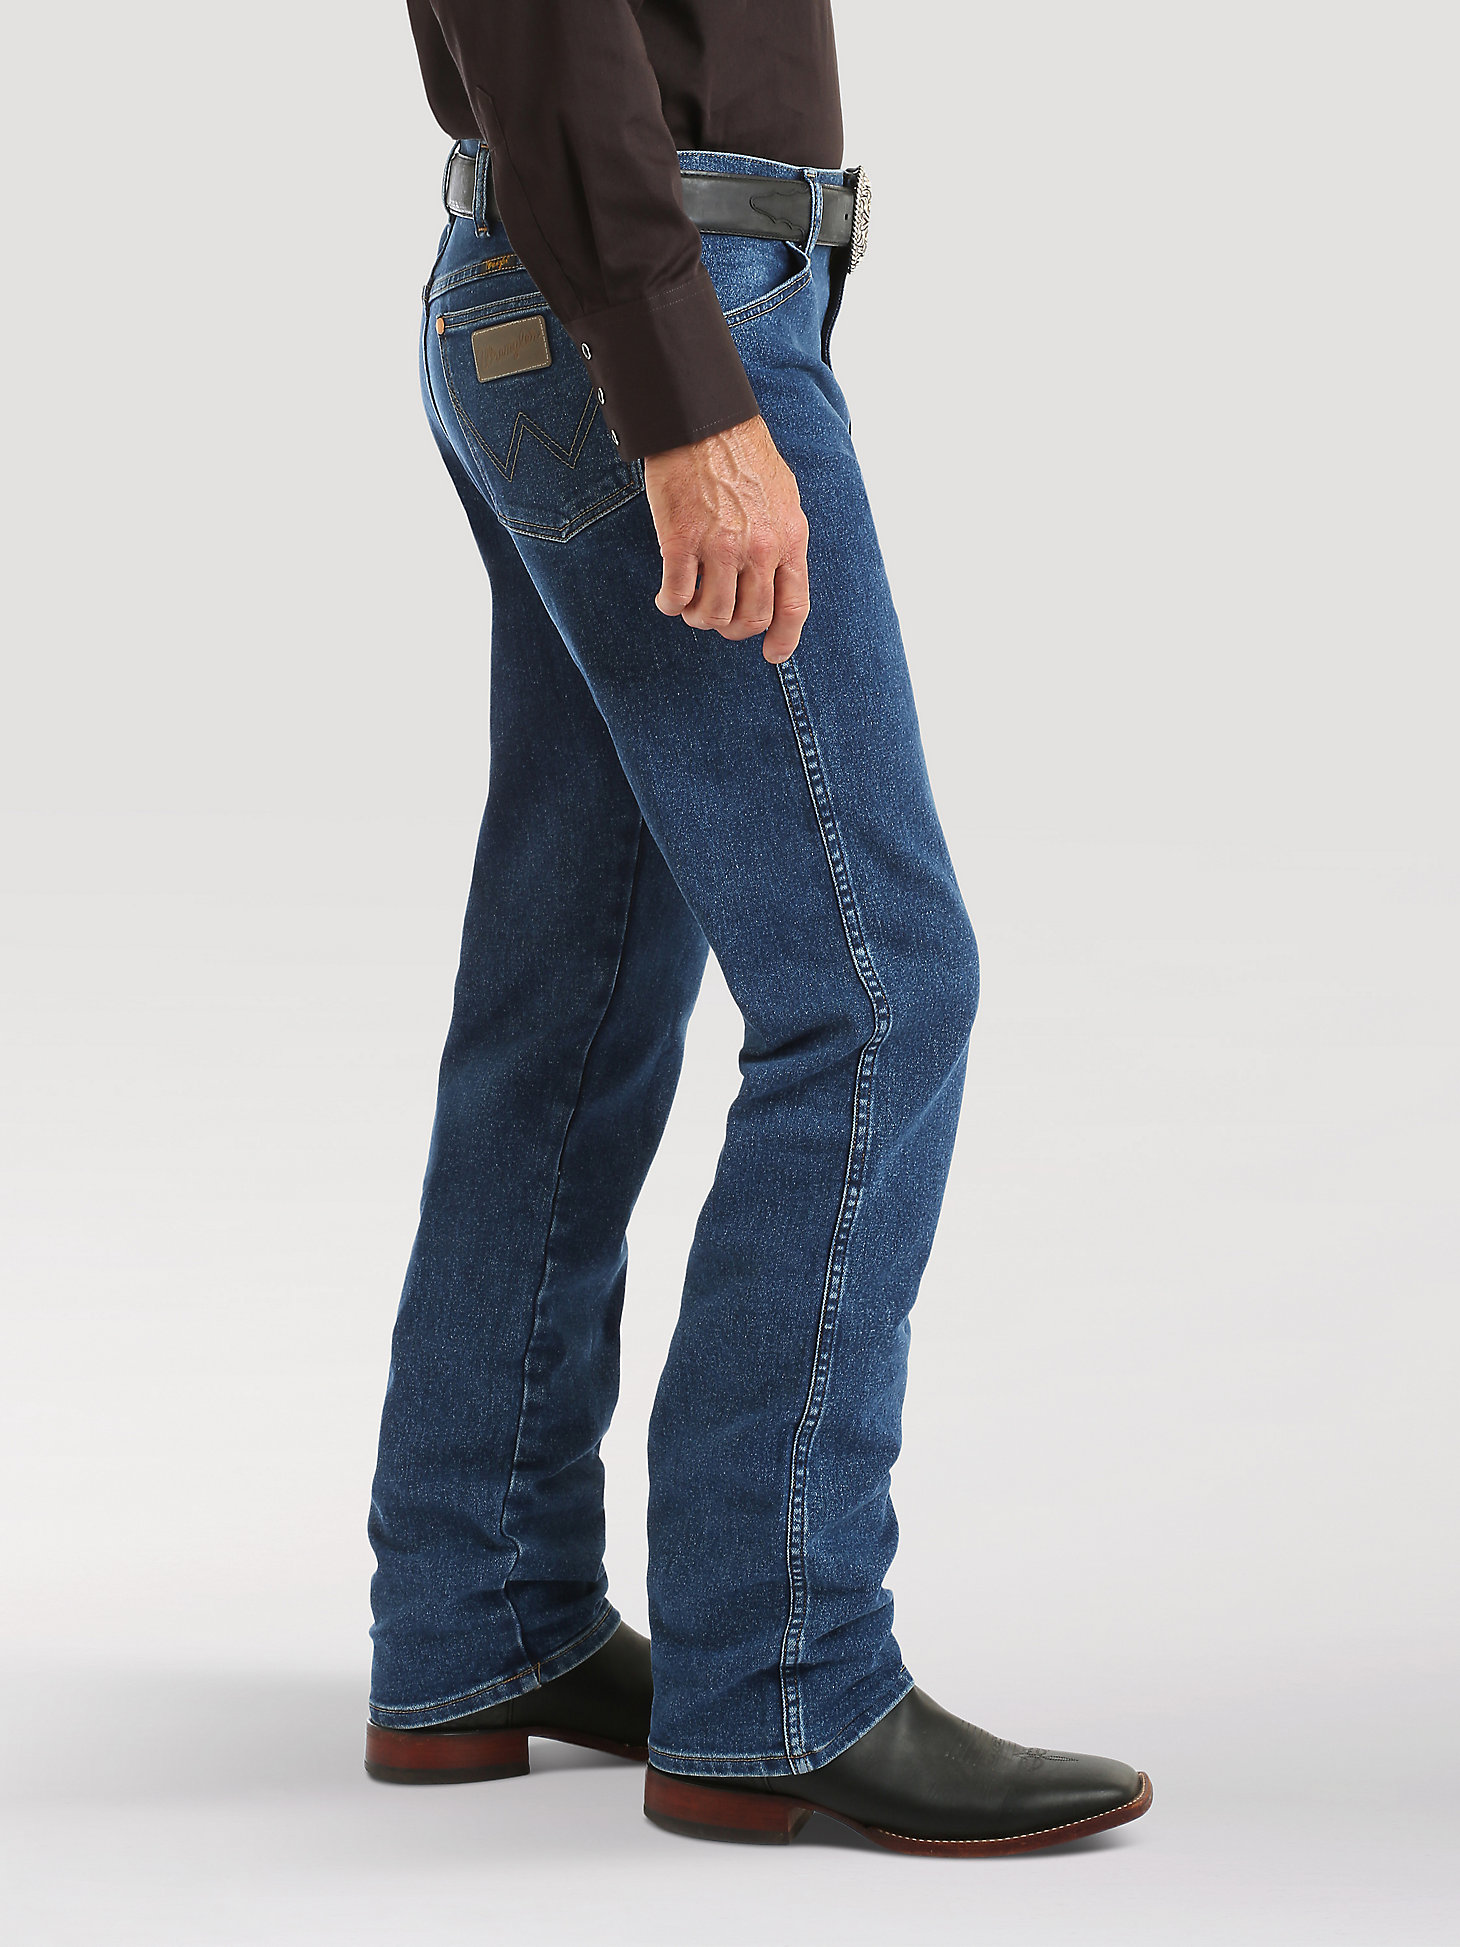 Wrangler® Cowboy Cut® Original Fit Active Flex Jeans in Stonewash alternative view 3